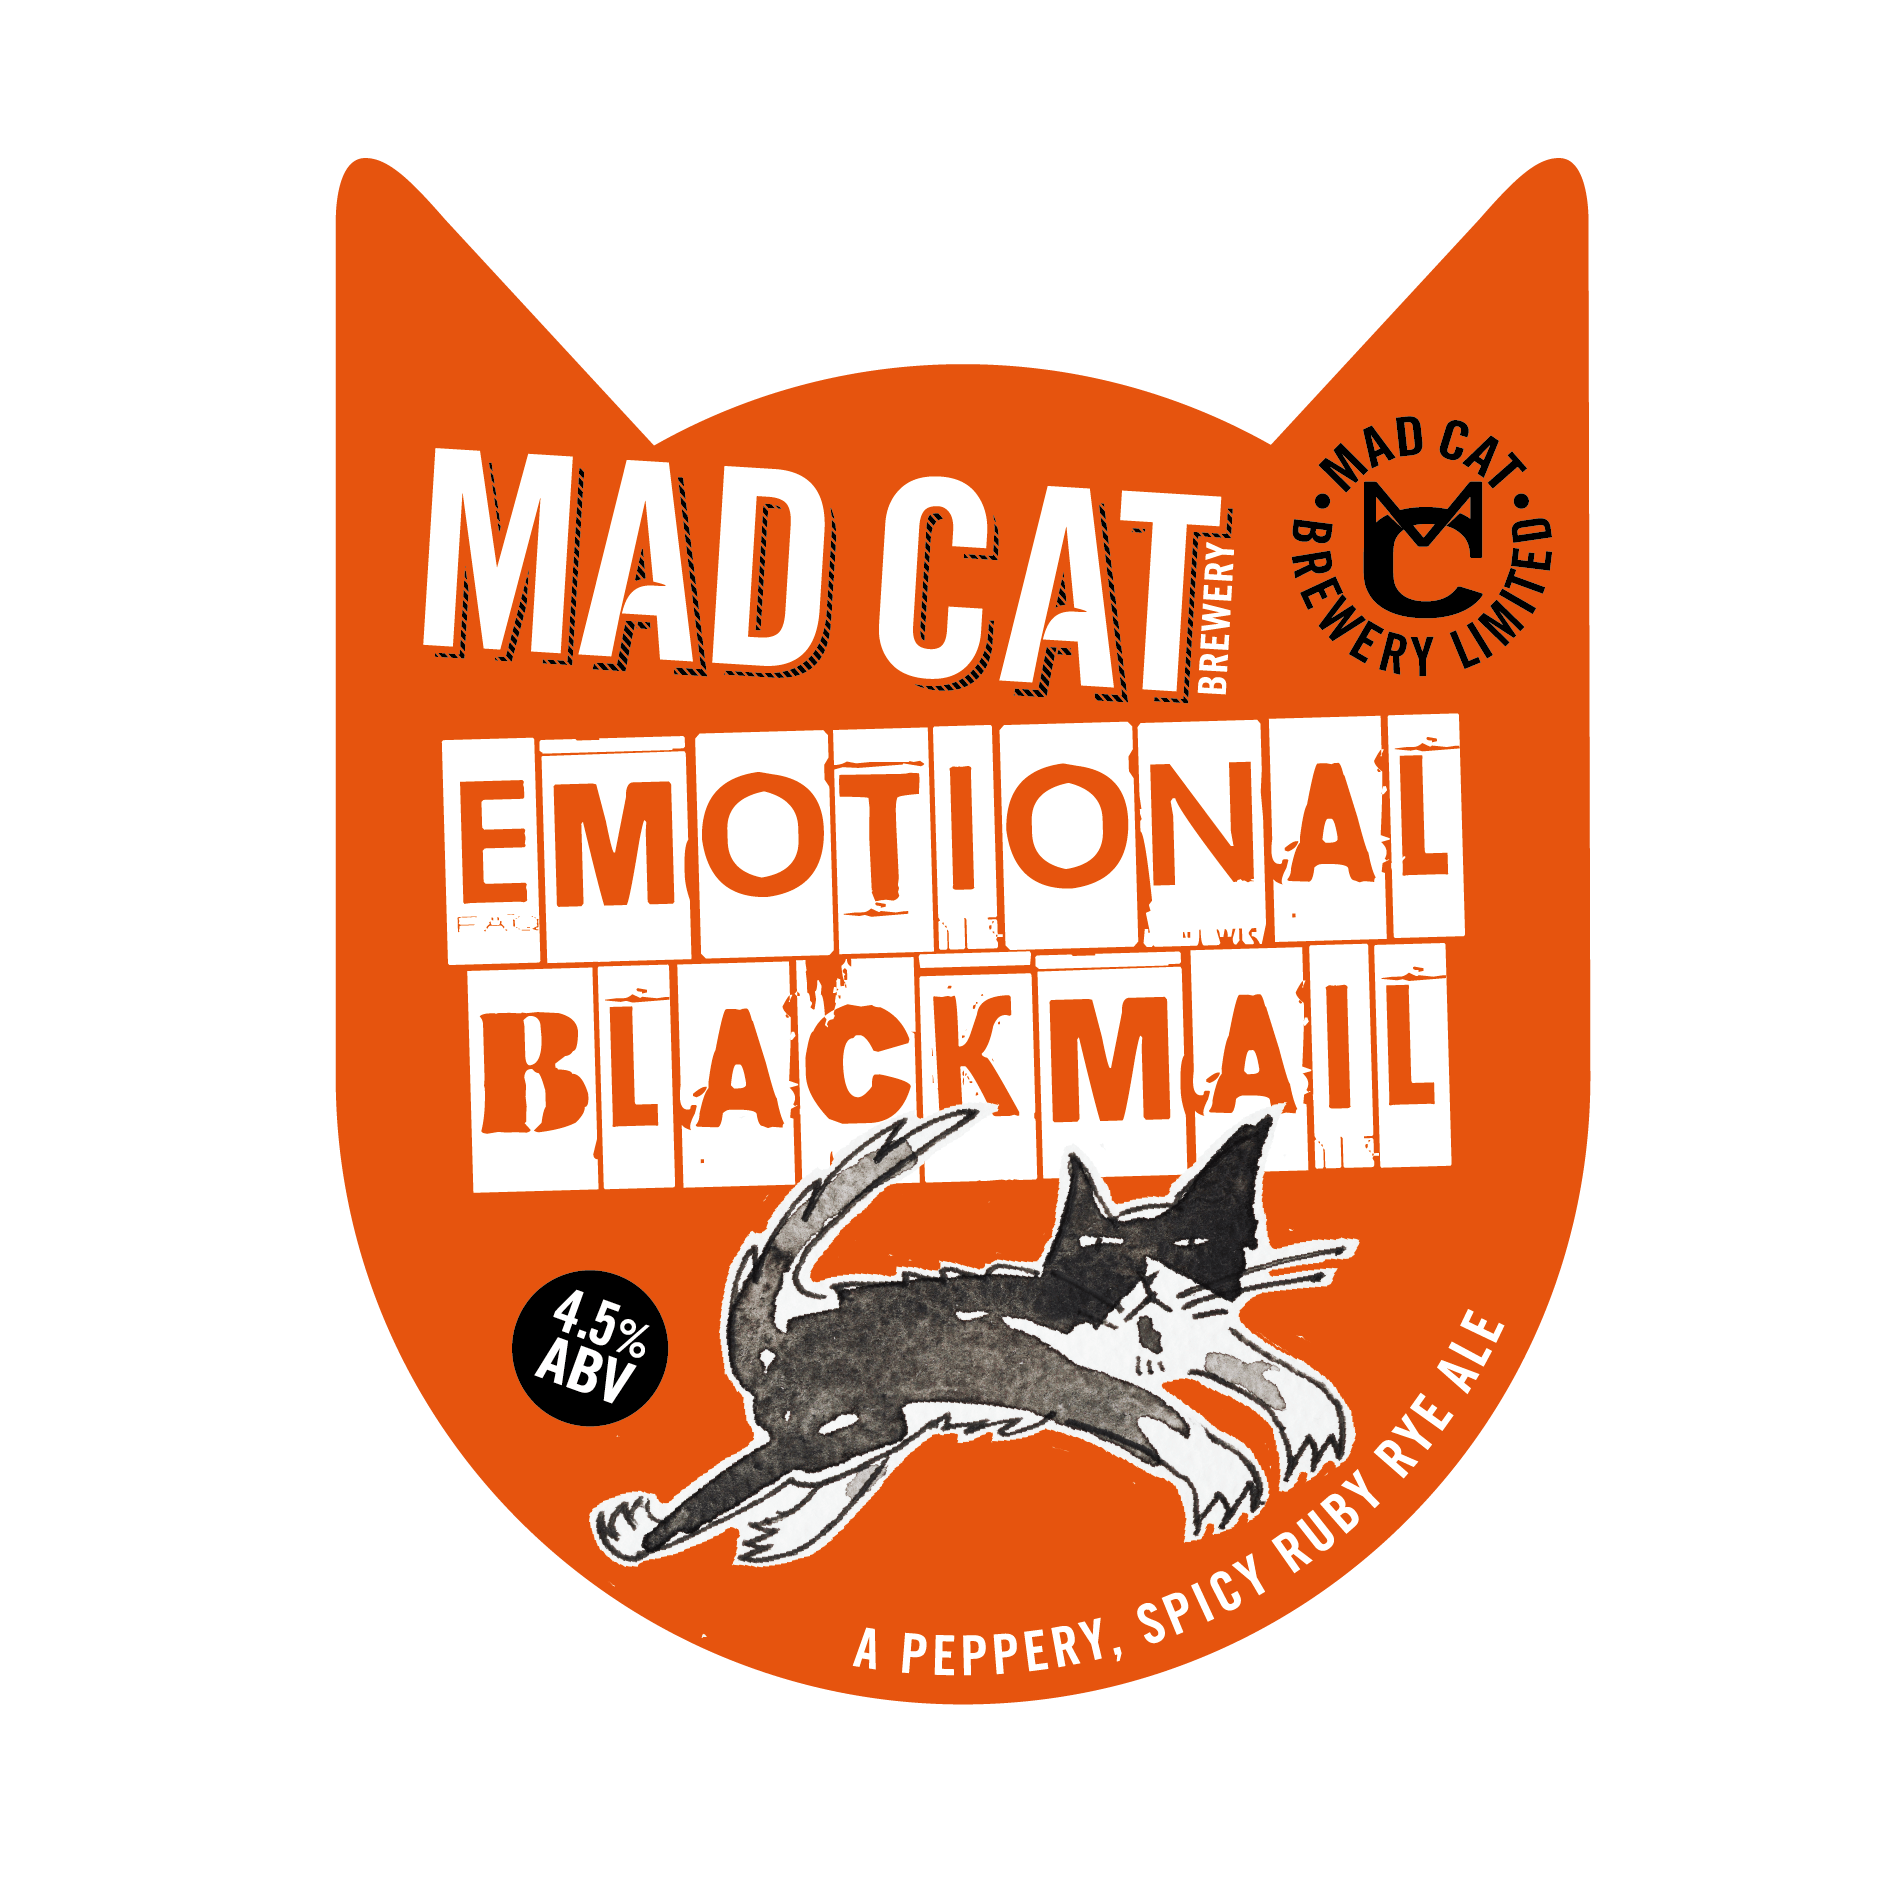 Black Mail Logo - Emotional Blackmail 4.5% - Mad Cat BreweryMad Cat Brewery